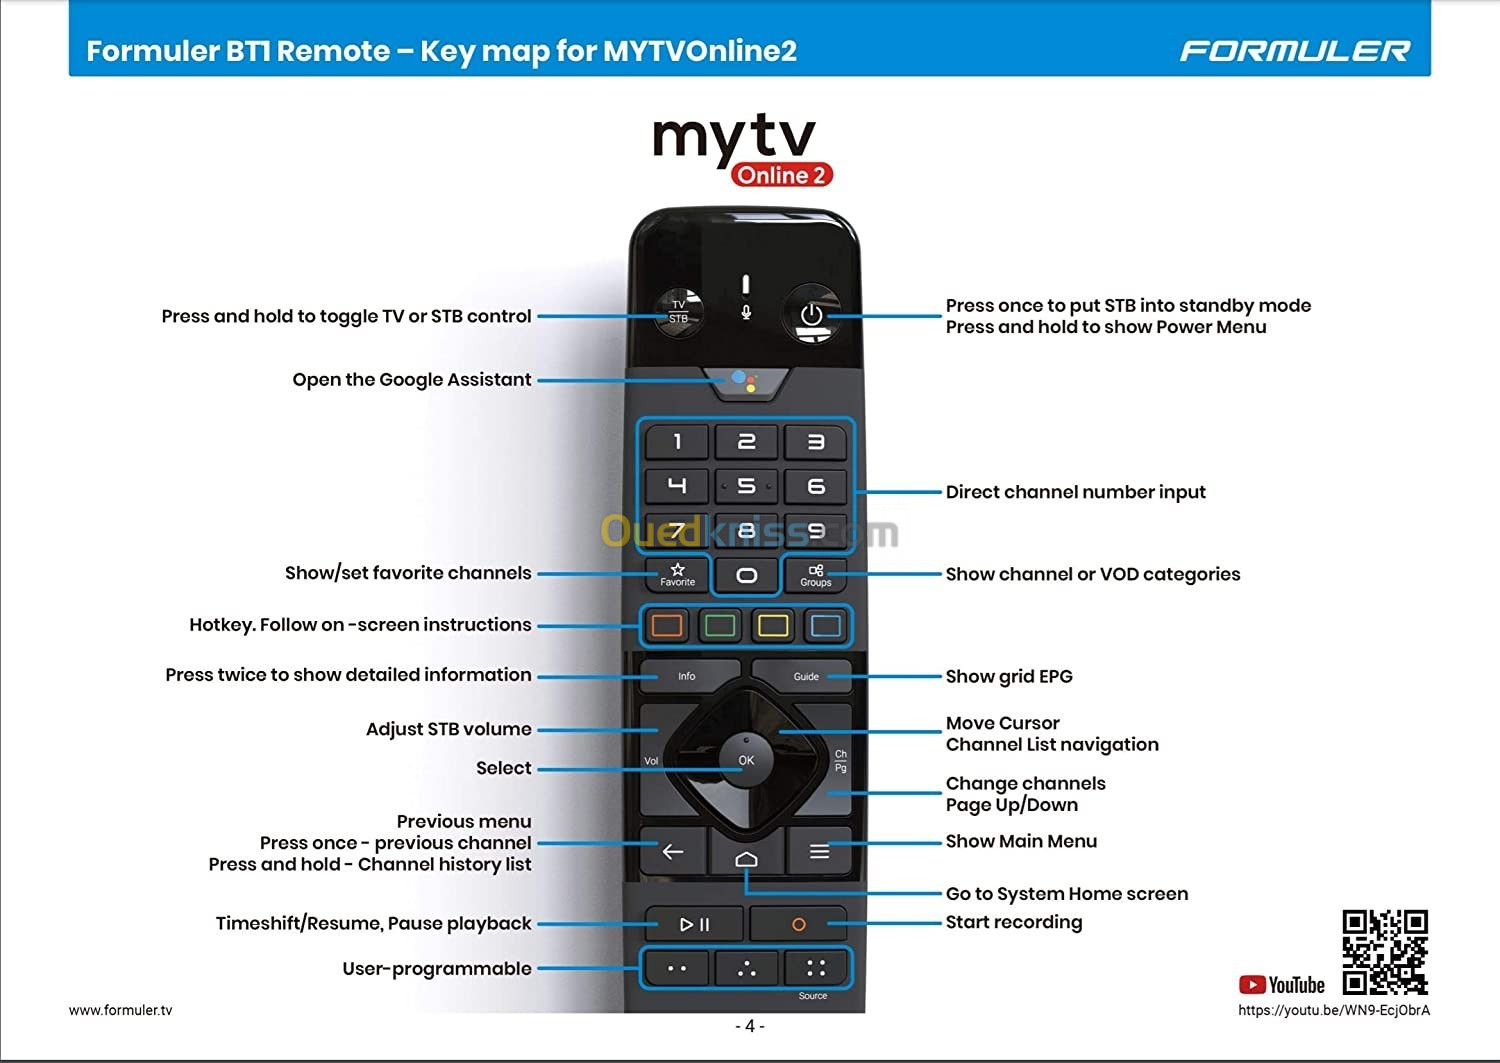 Formuler GTV-BT1 Télécommande vocale Bluetooth hybride avec